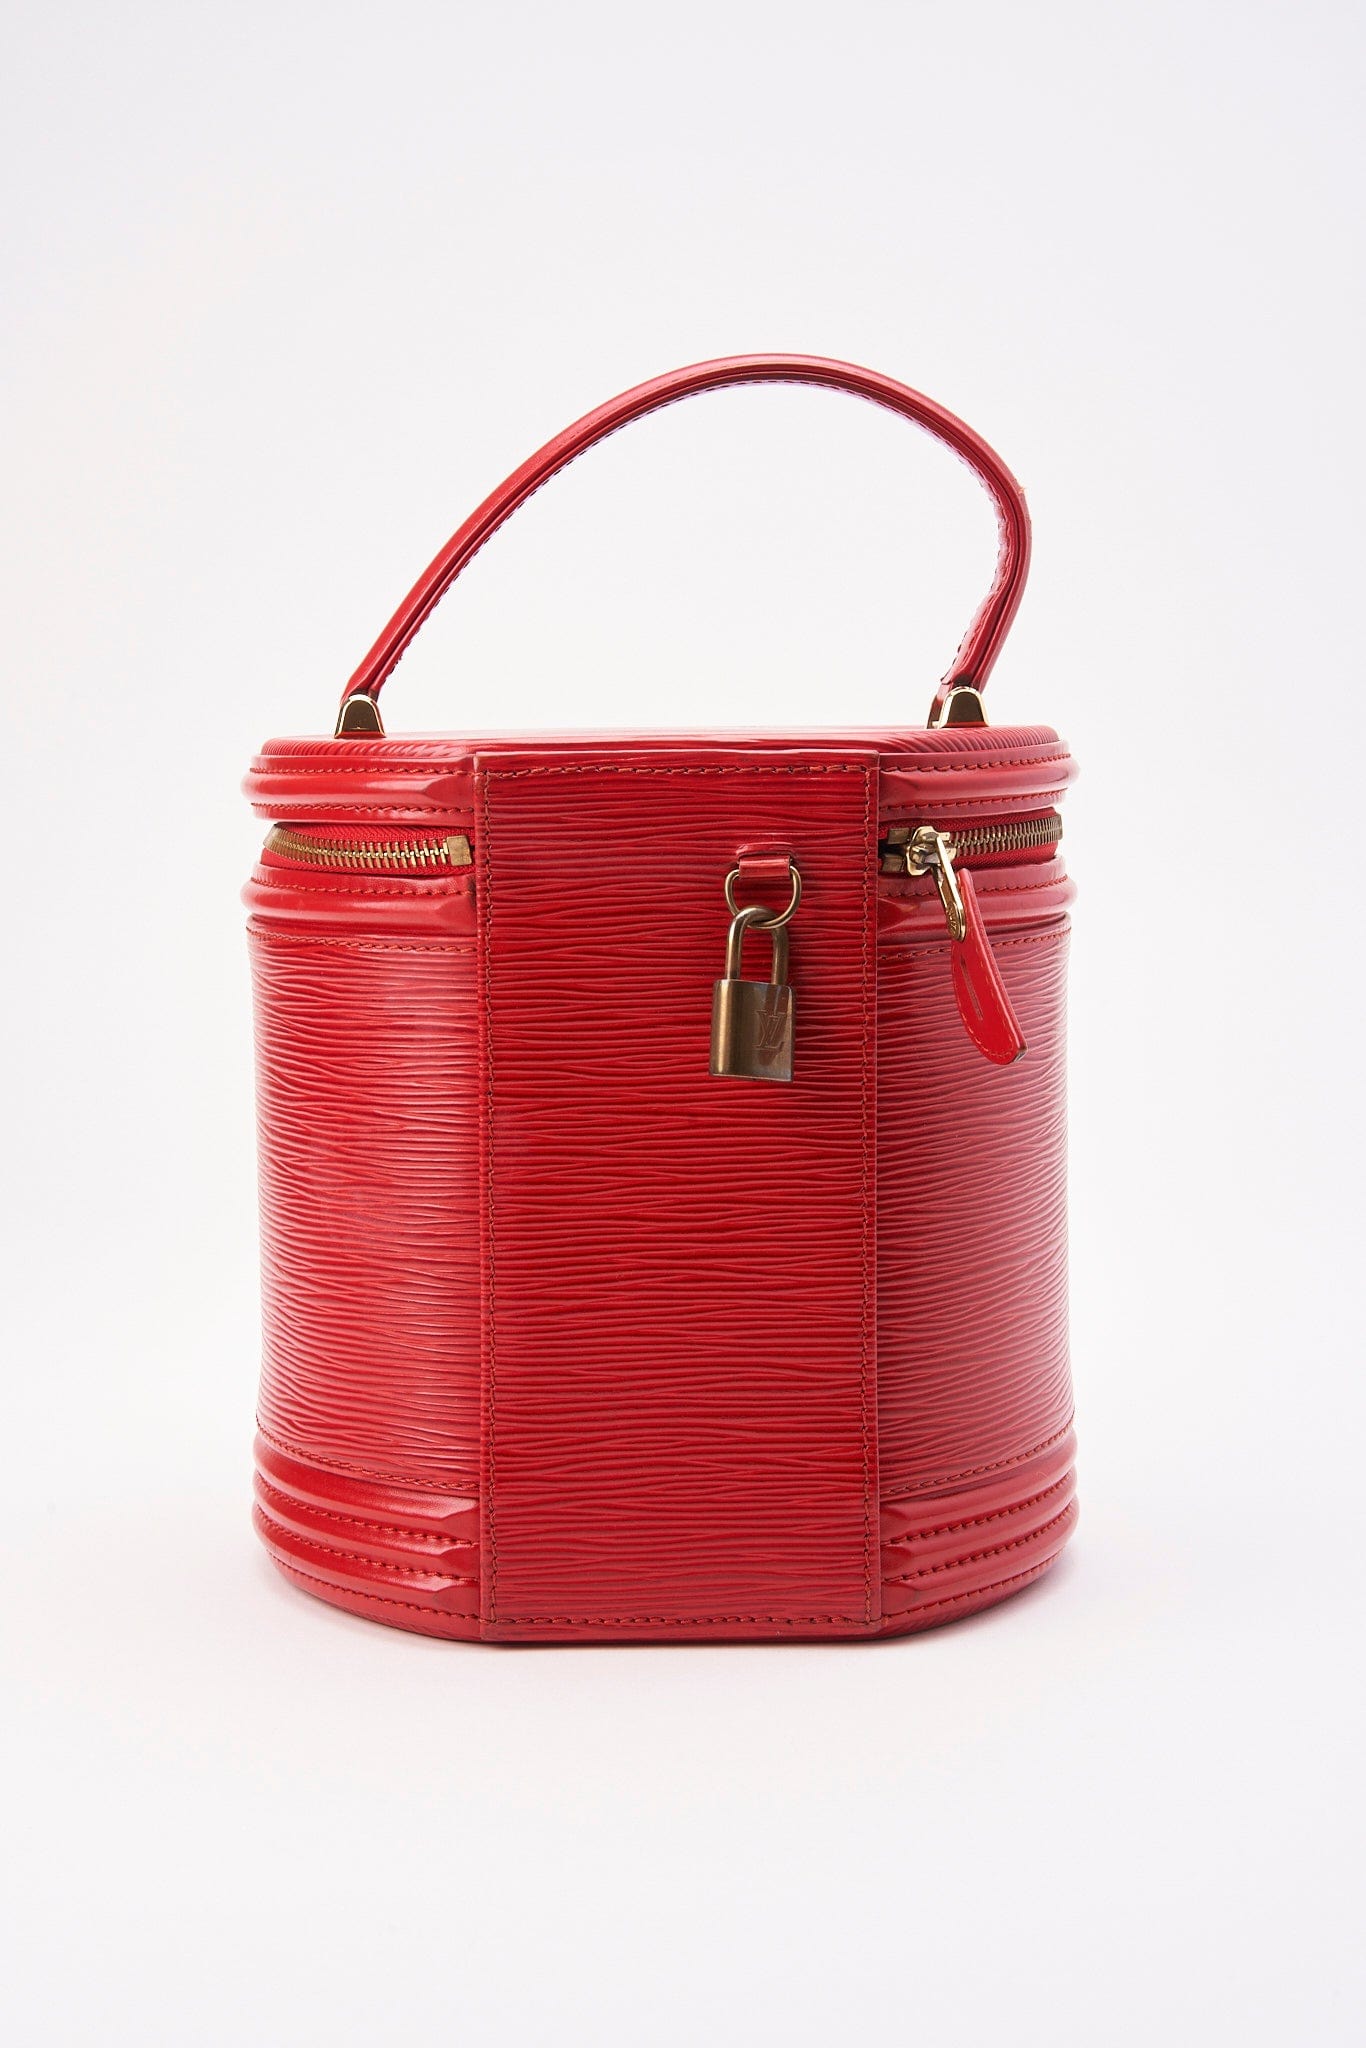 Louis Vuitton Epi Cannes Handbag Vanity Bag